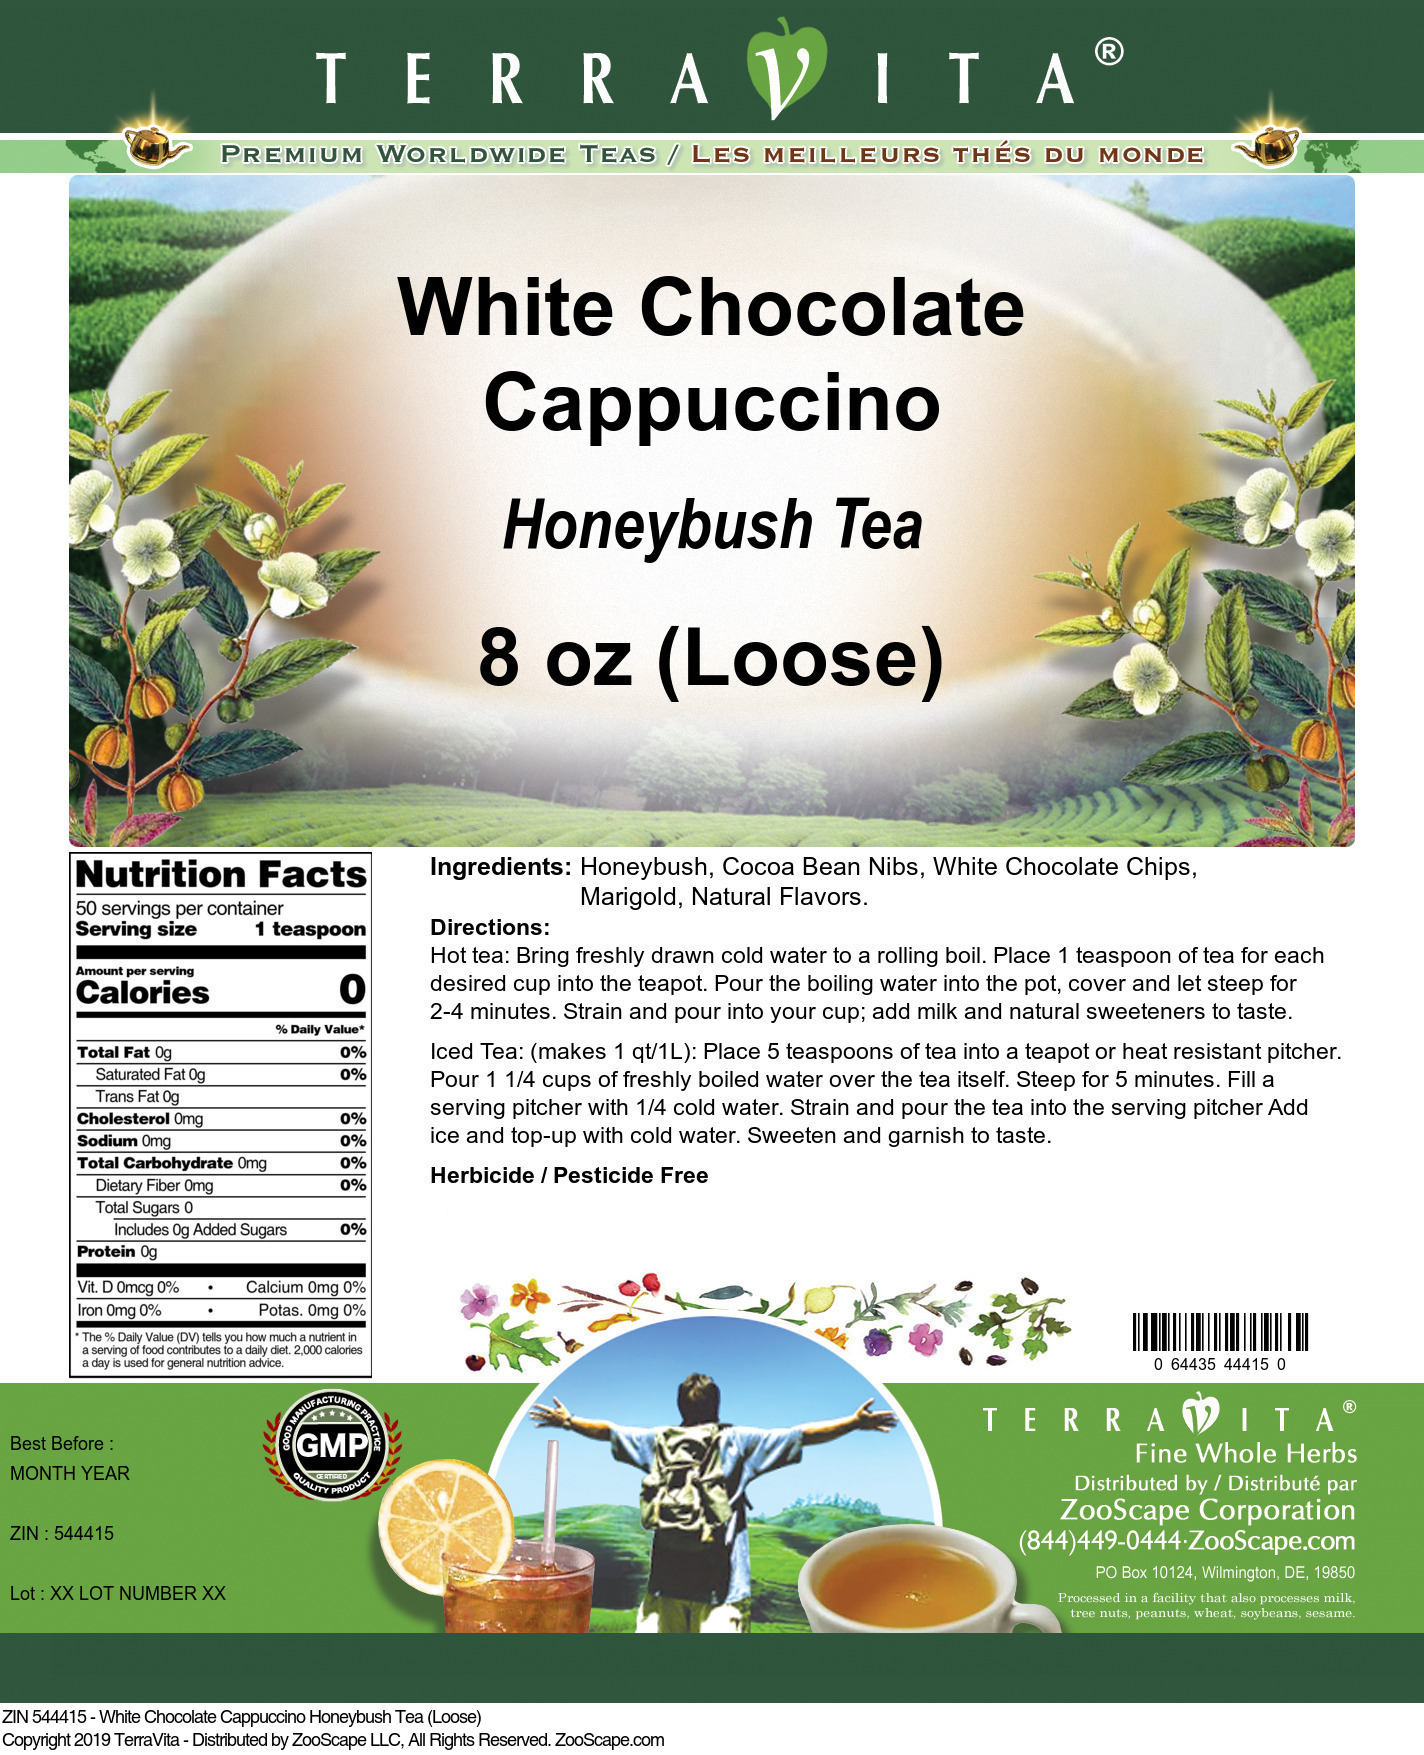 White Chocolate Cappuccino Honeybush Tea (Loose) - Label